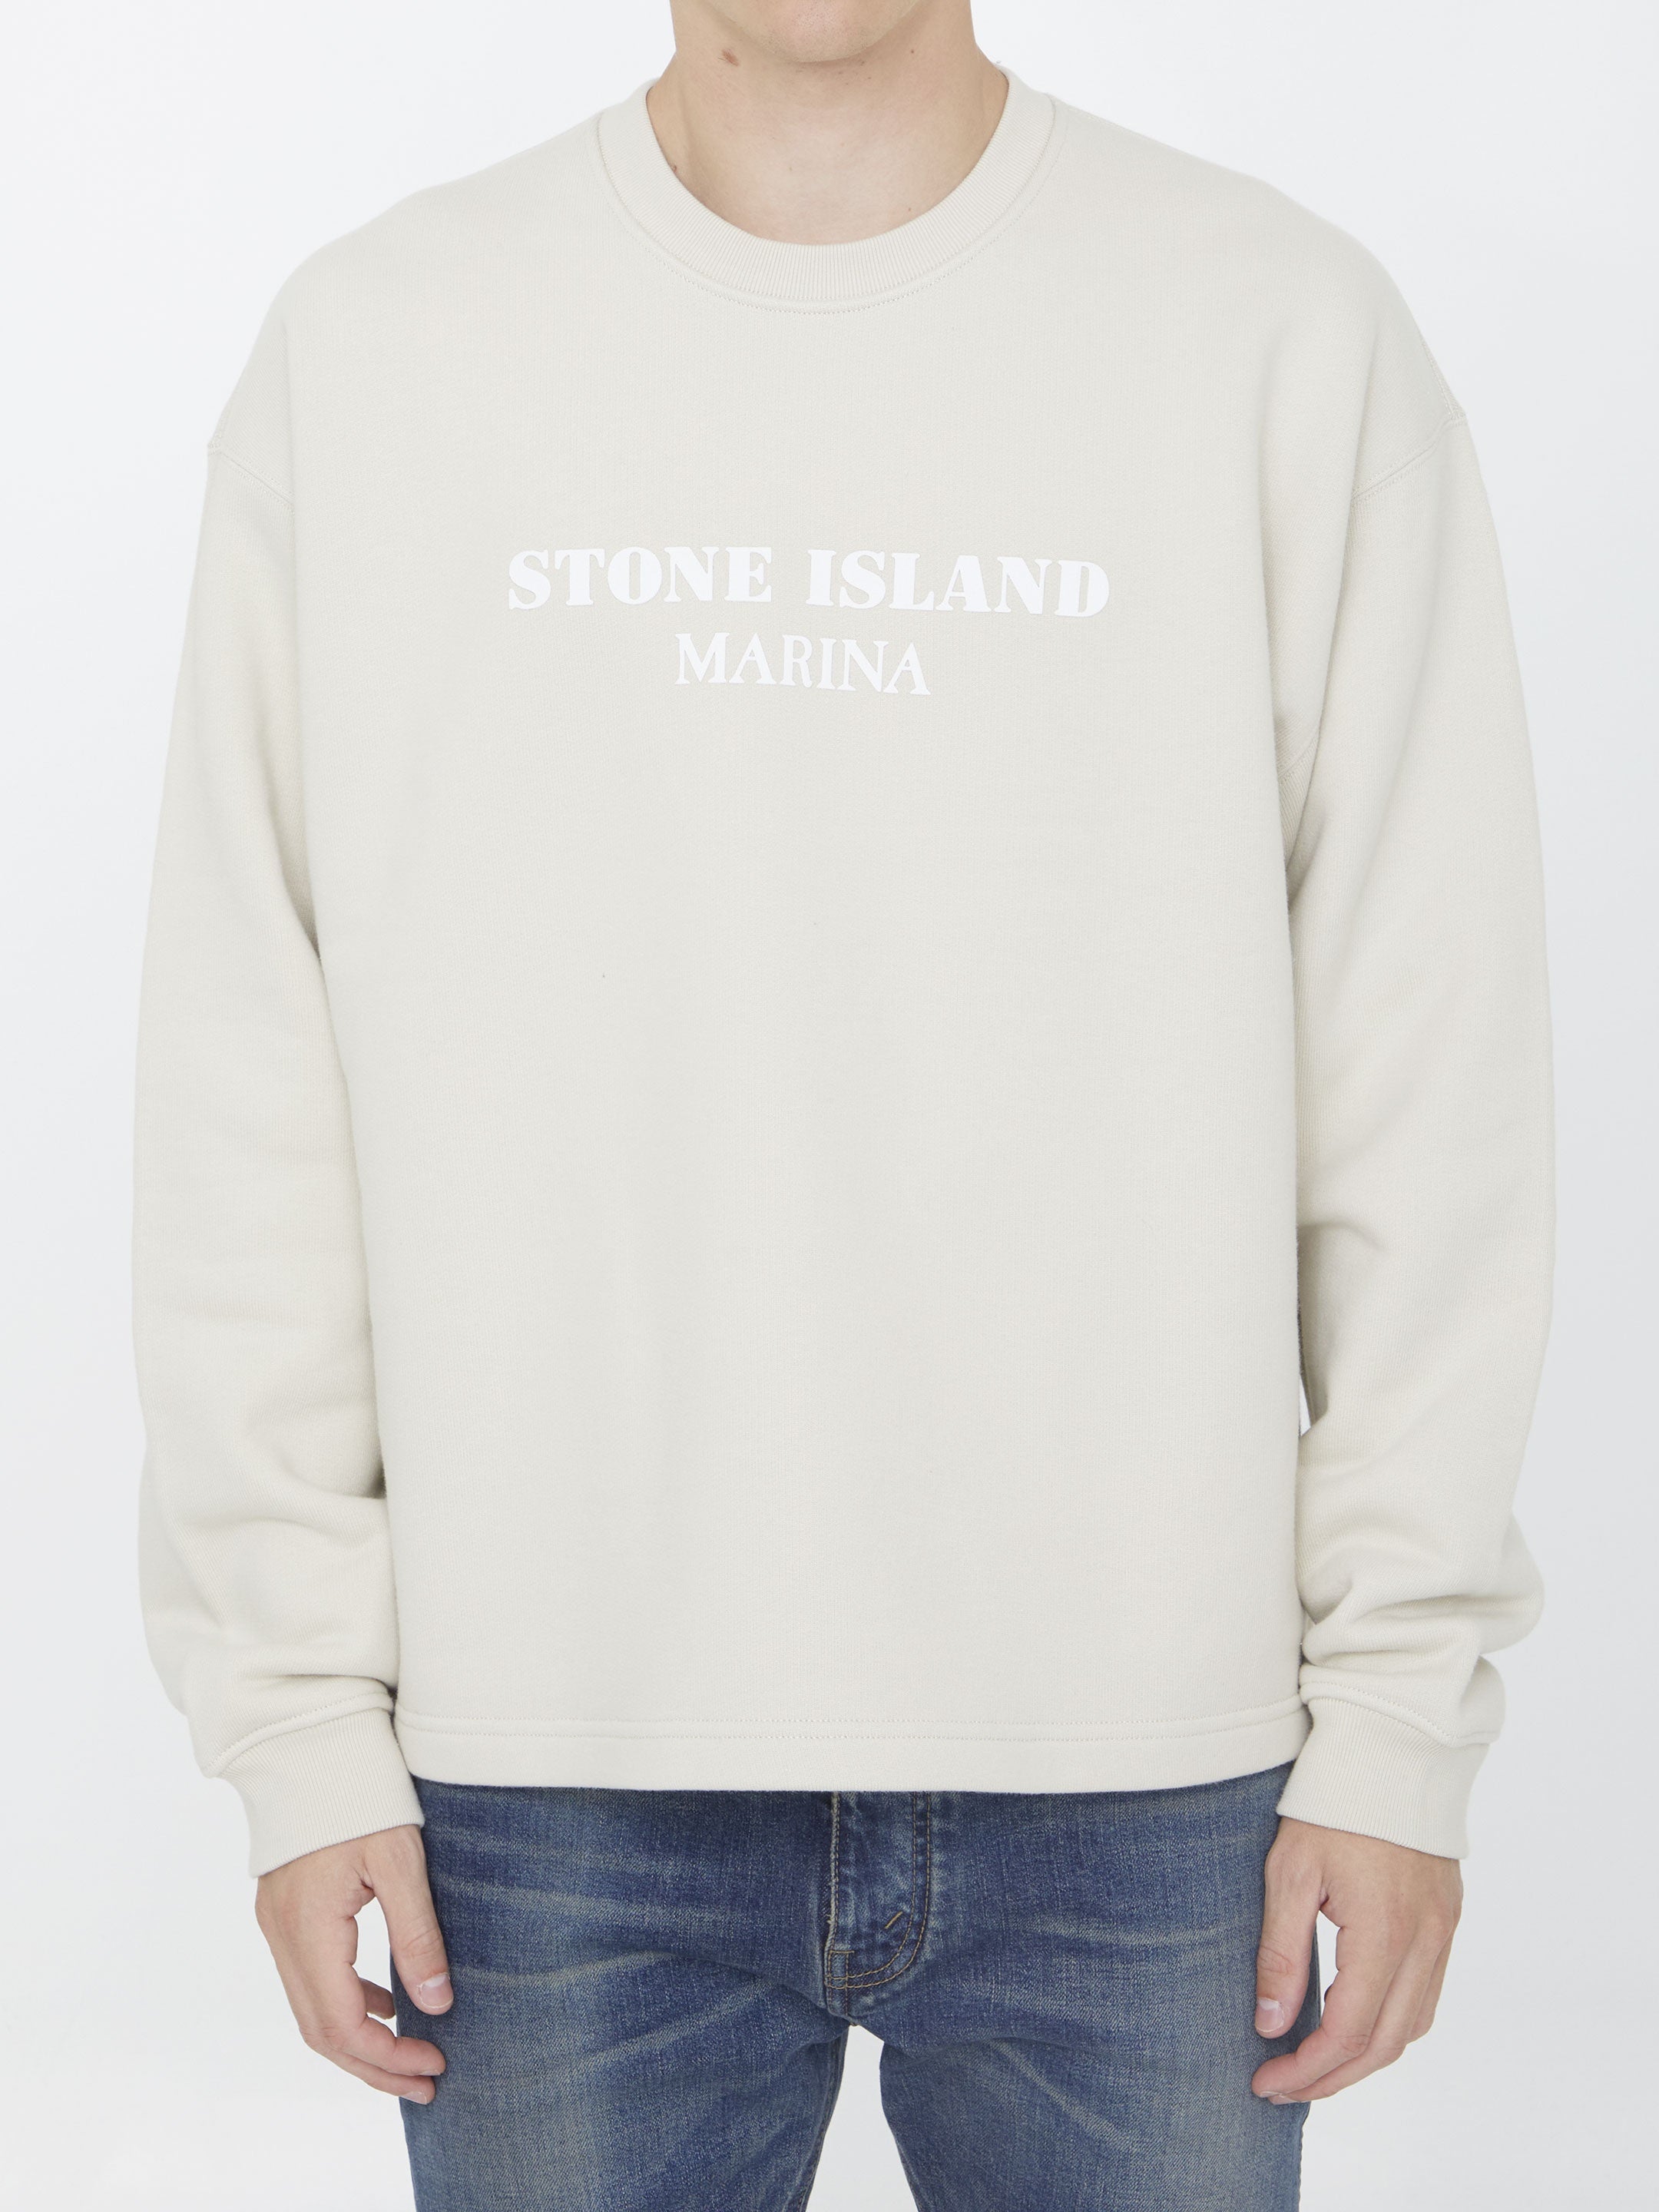 Cotton sweatshirt with logo